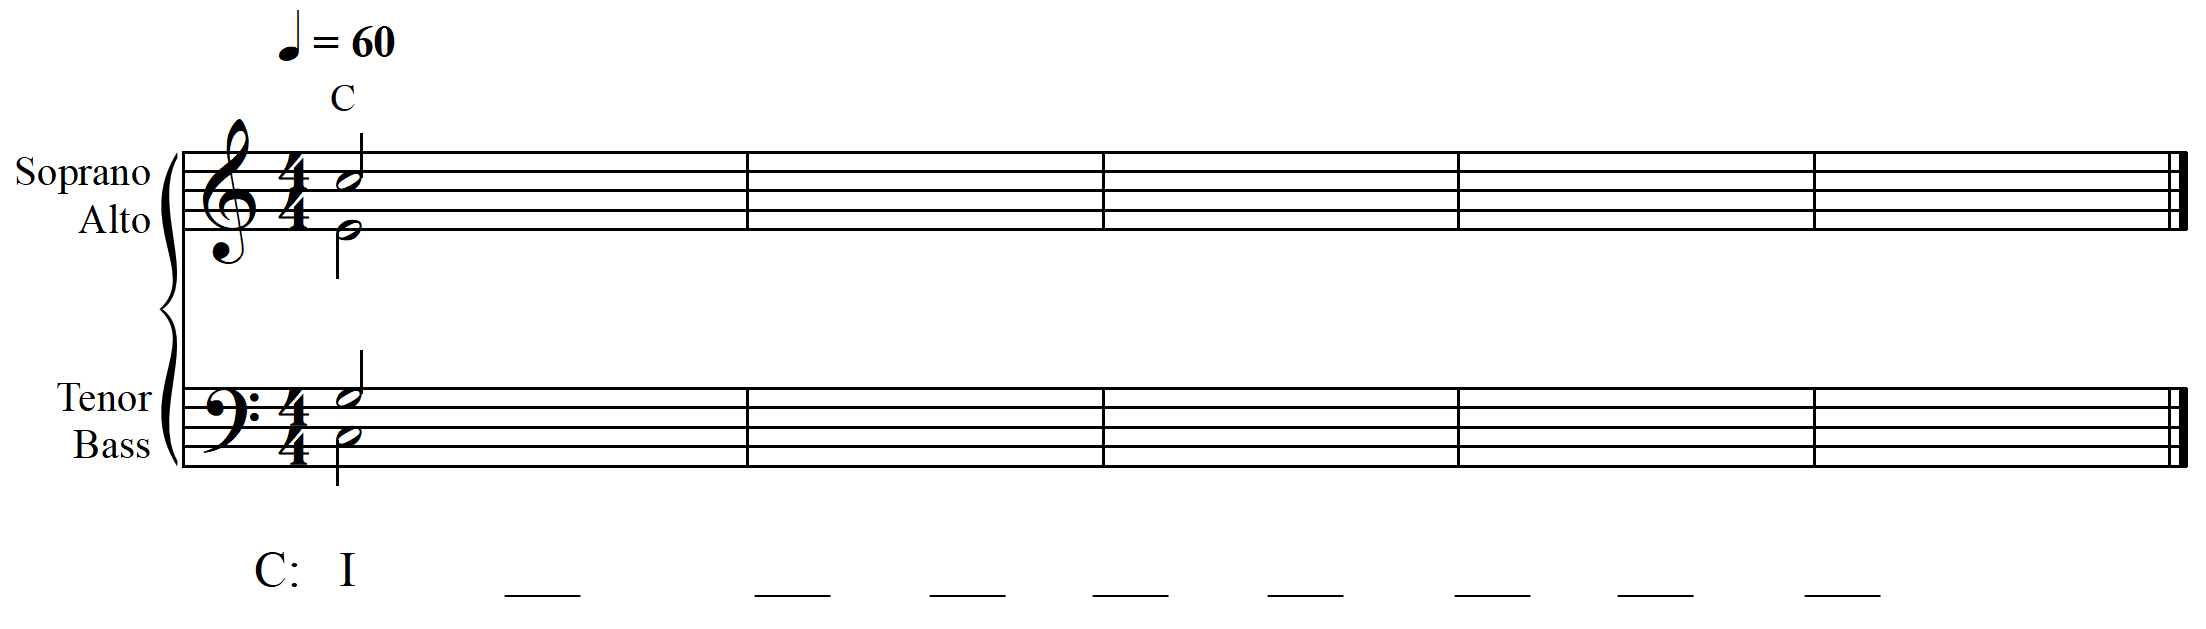 melodic dictation simple meter intermediate example 5